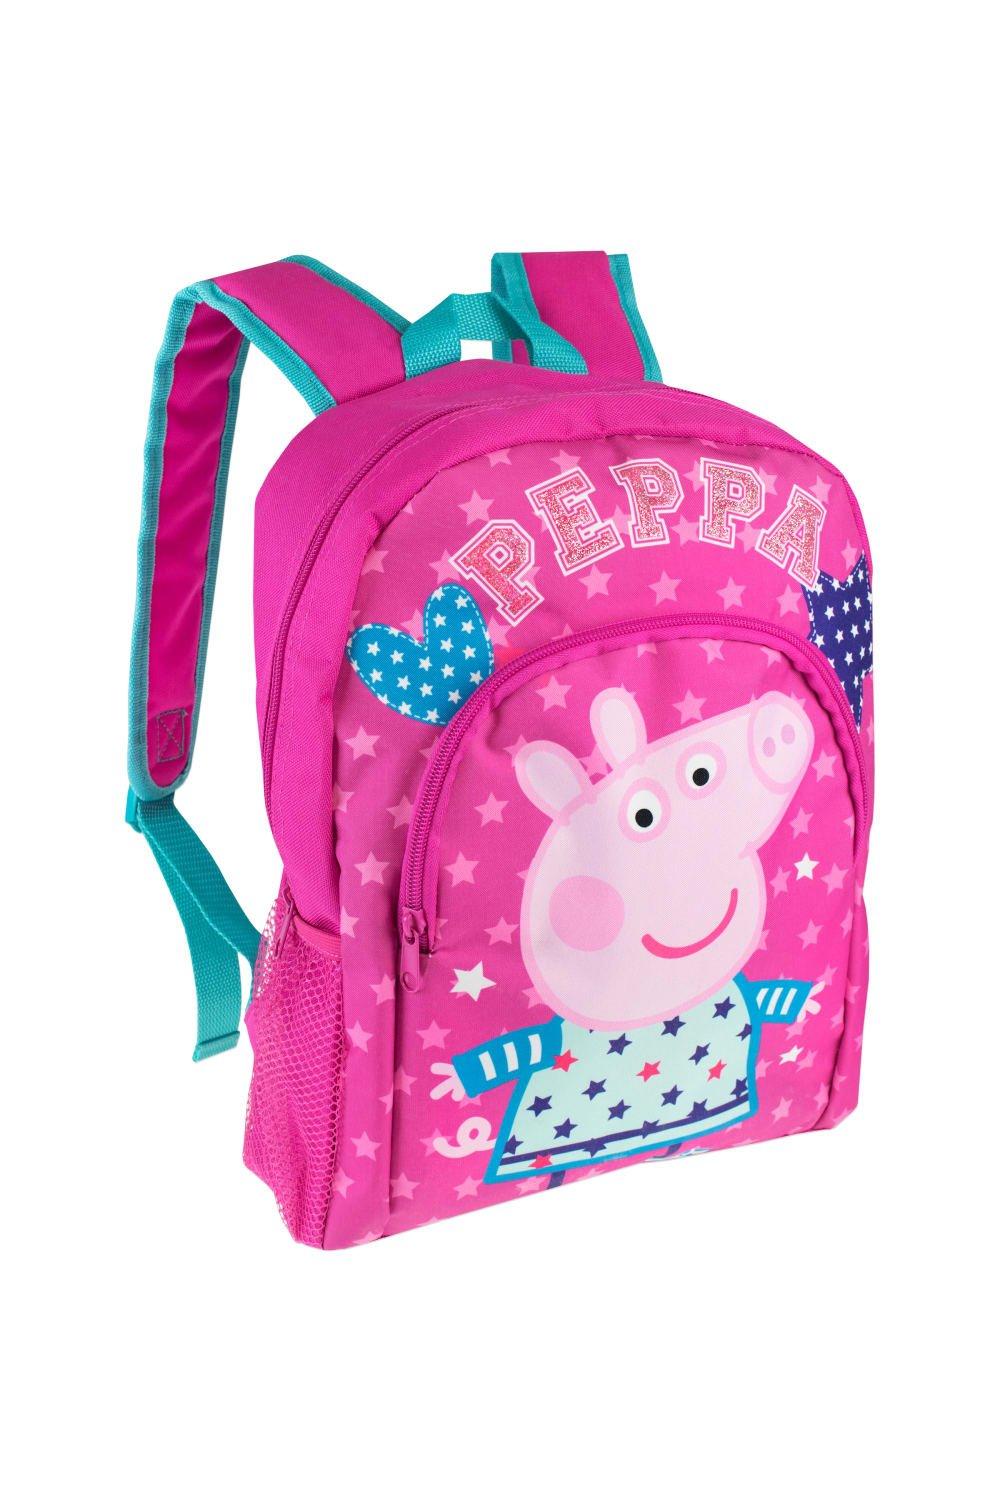 Детский рюкзак Peppa Pig, розовый пазл origami 35эл 33 47см maxi свинка пеппа прогулка по рынку наклейки 04297